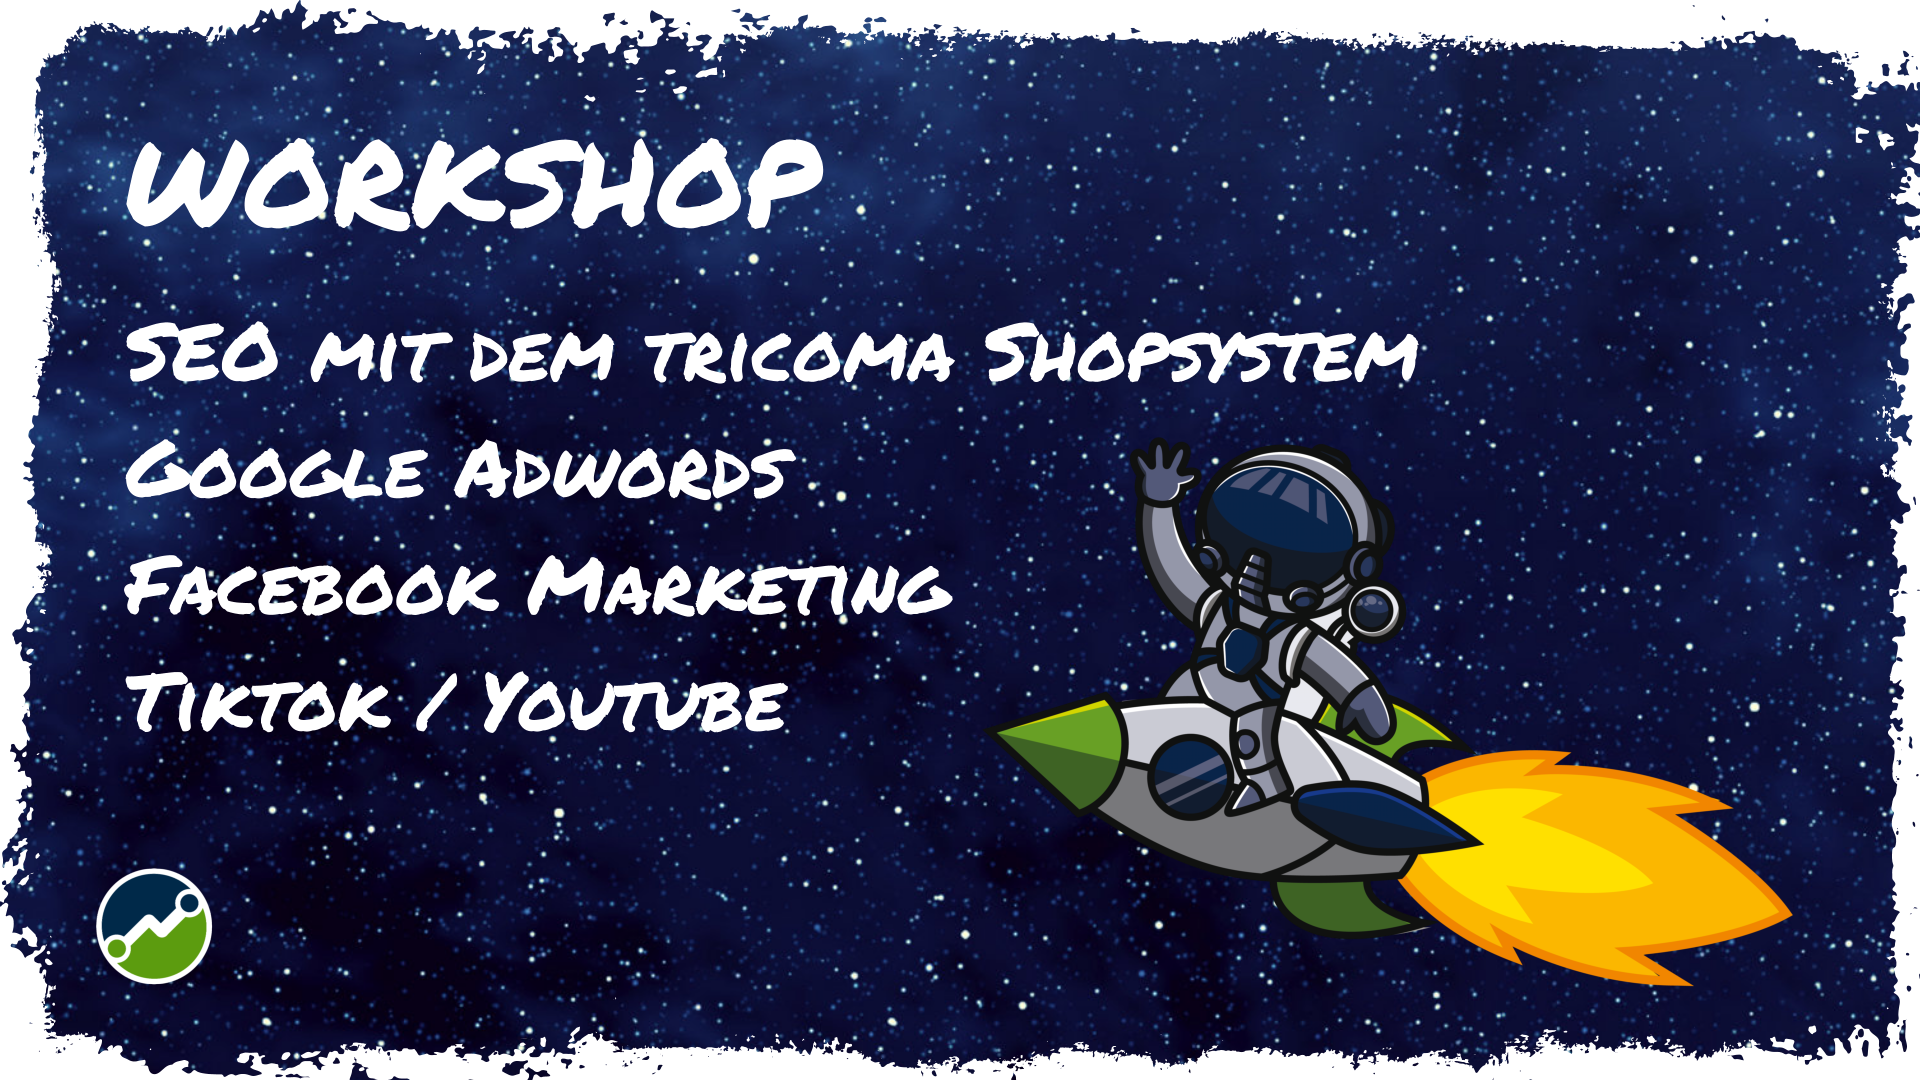 Workshop - Marketing mit dem tricoma Shopsystem